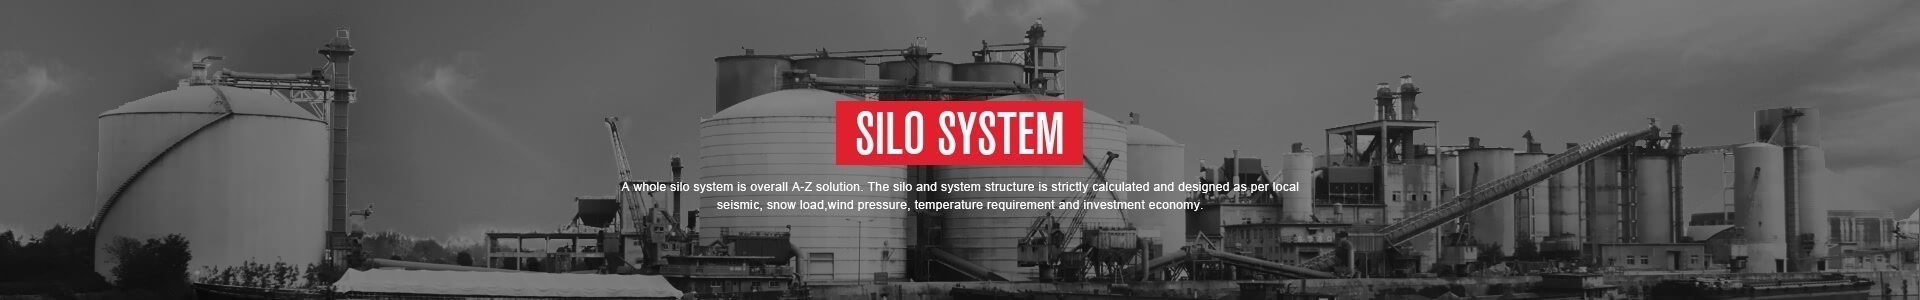 silo system